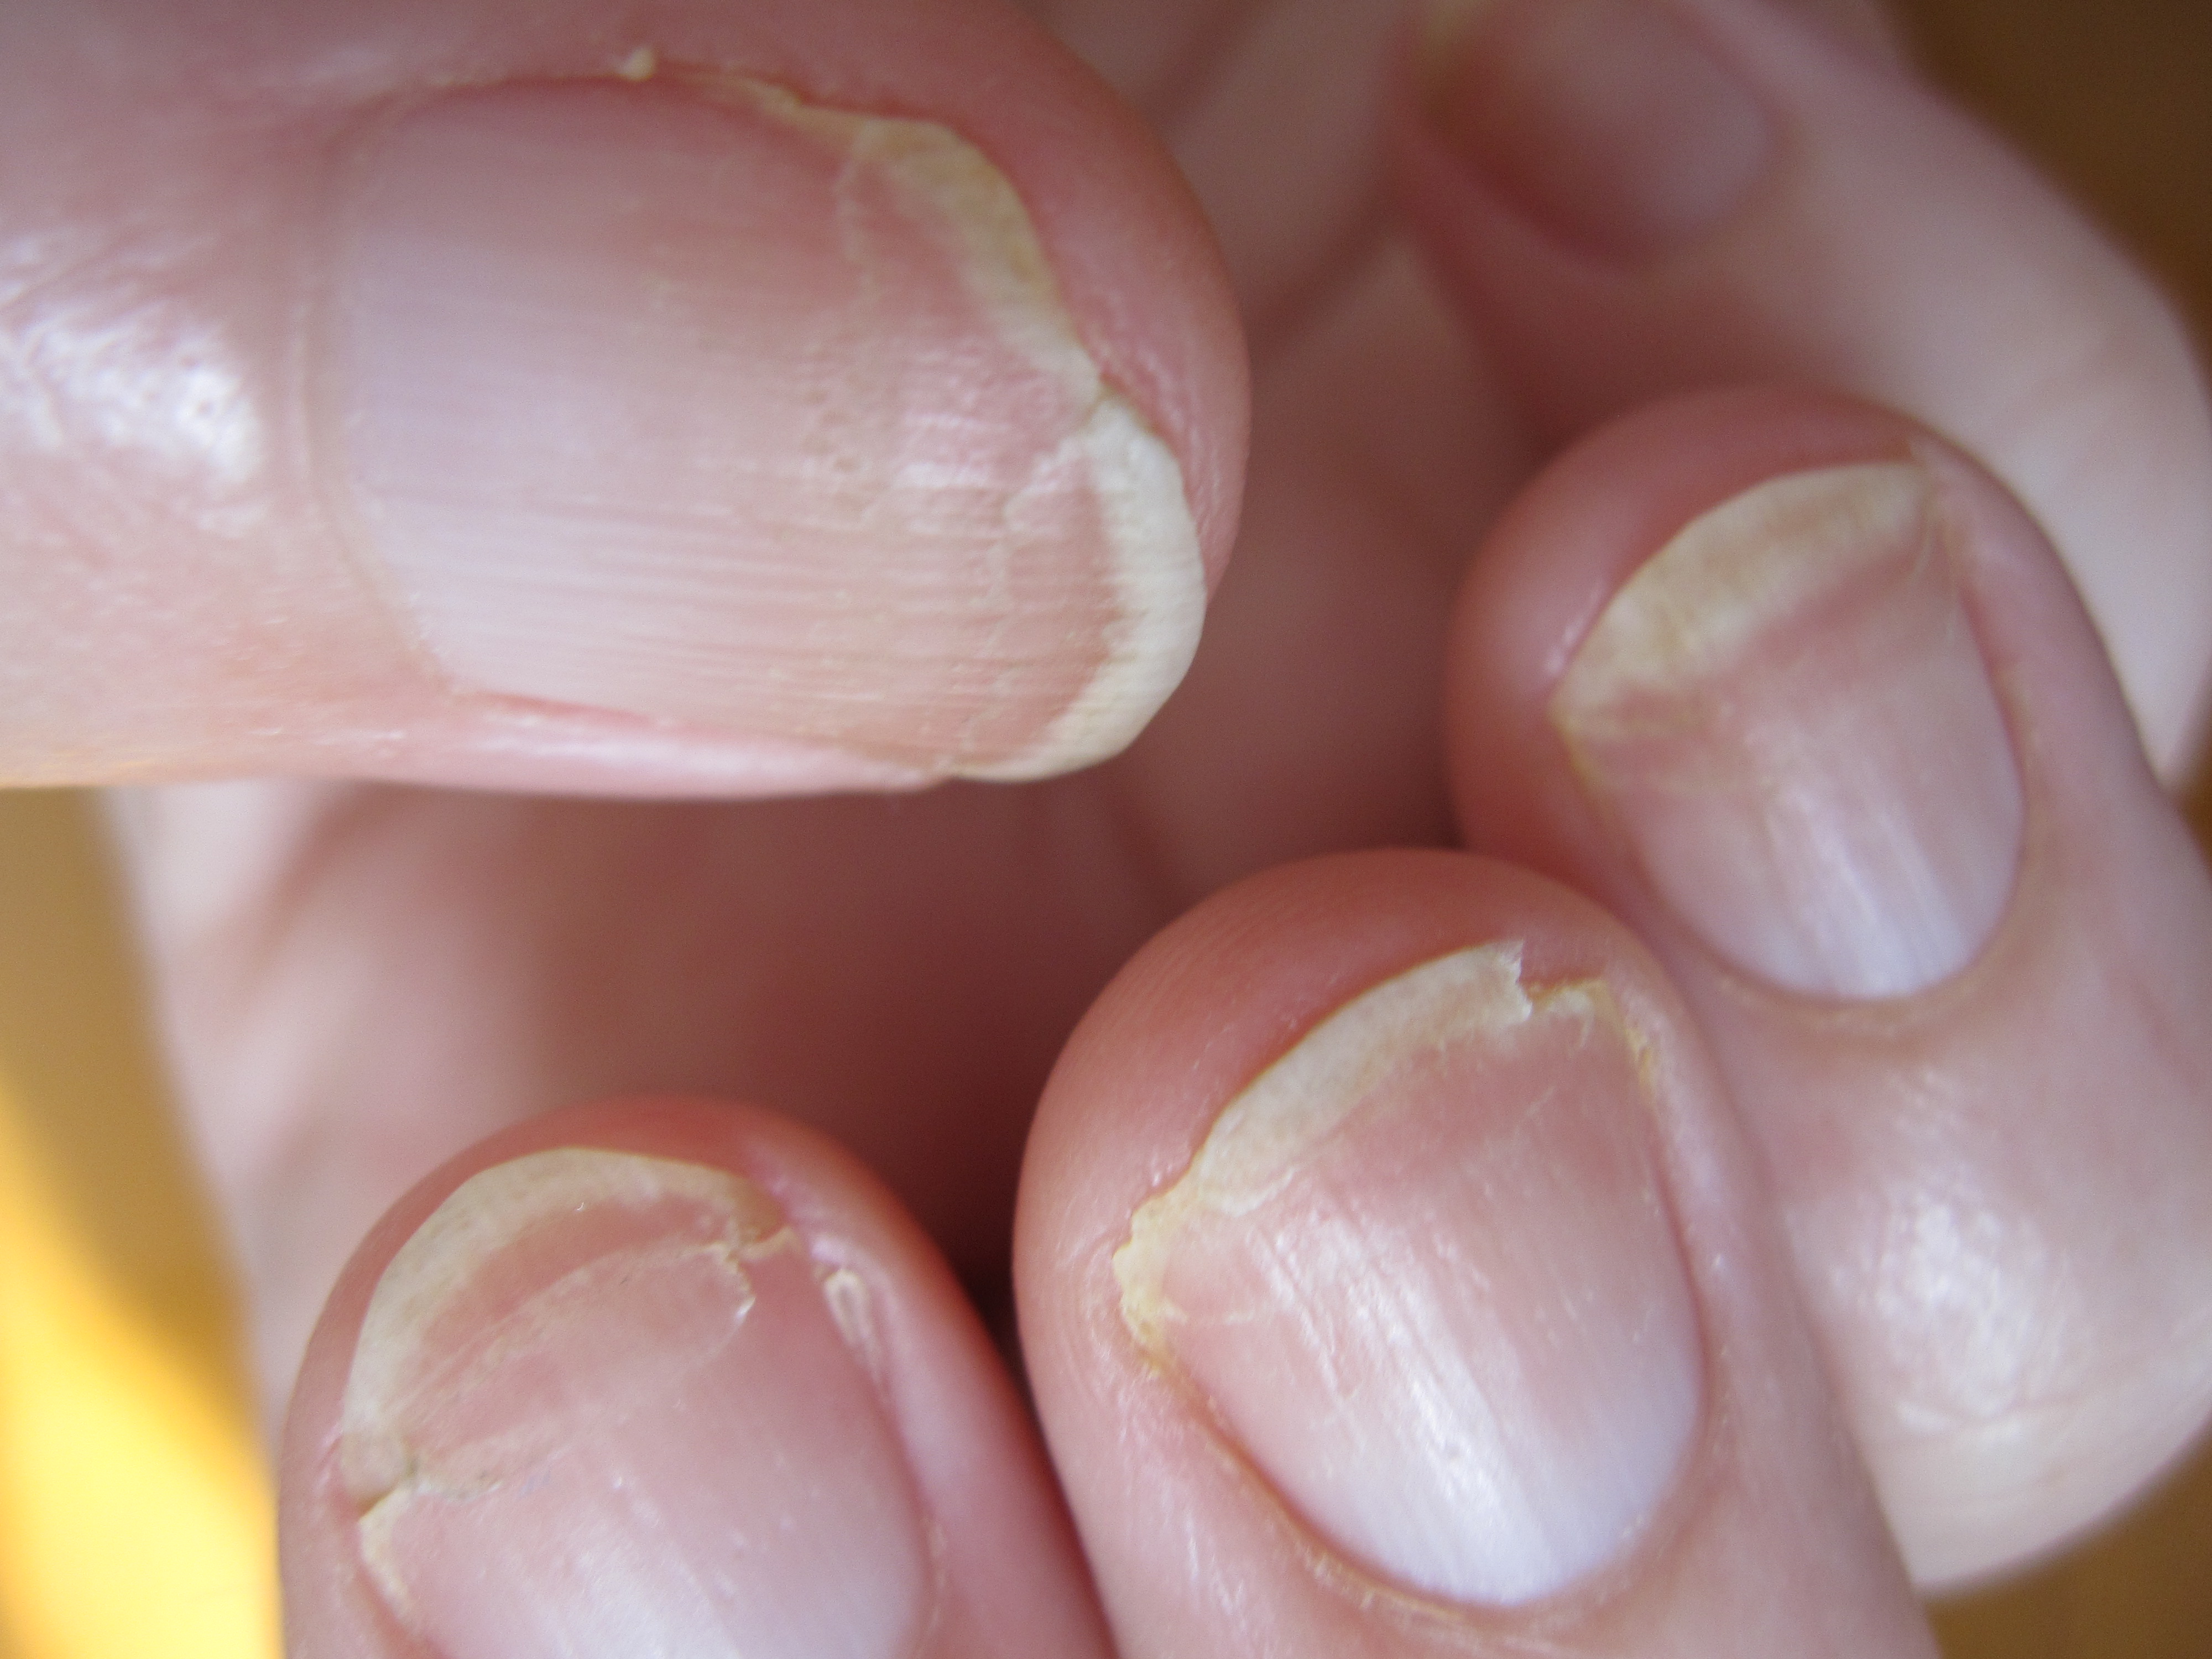 split nails treatment #10